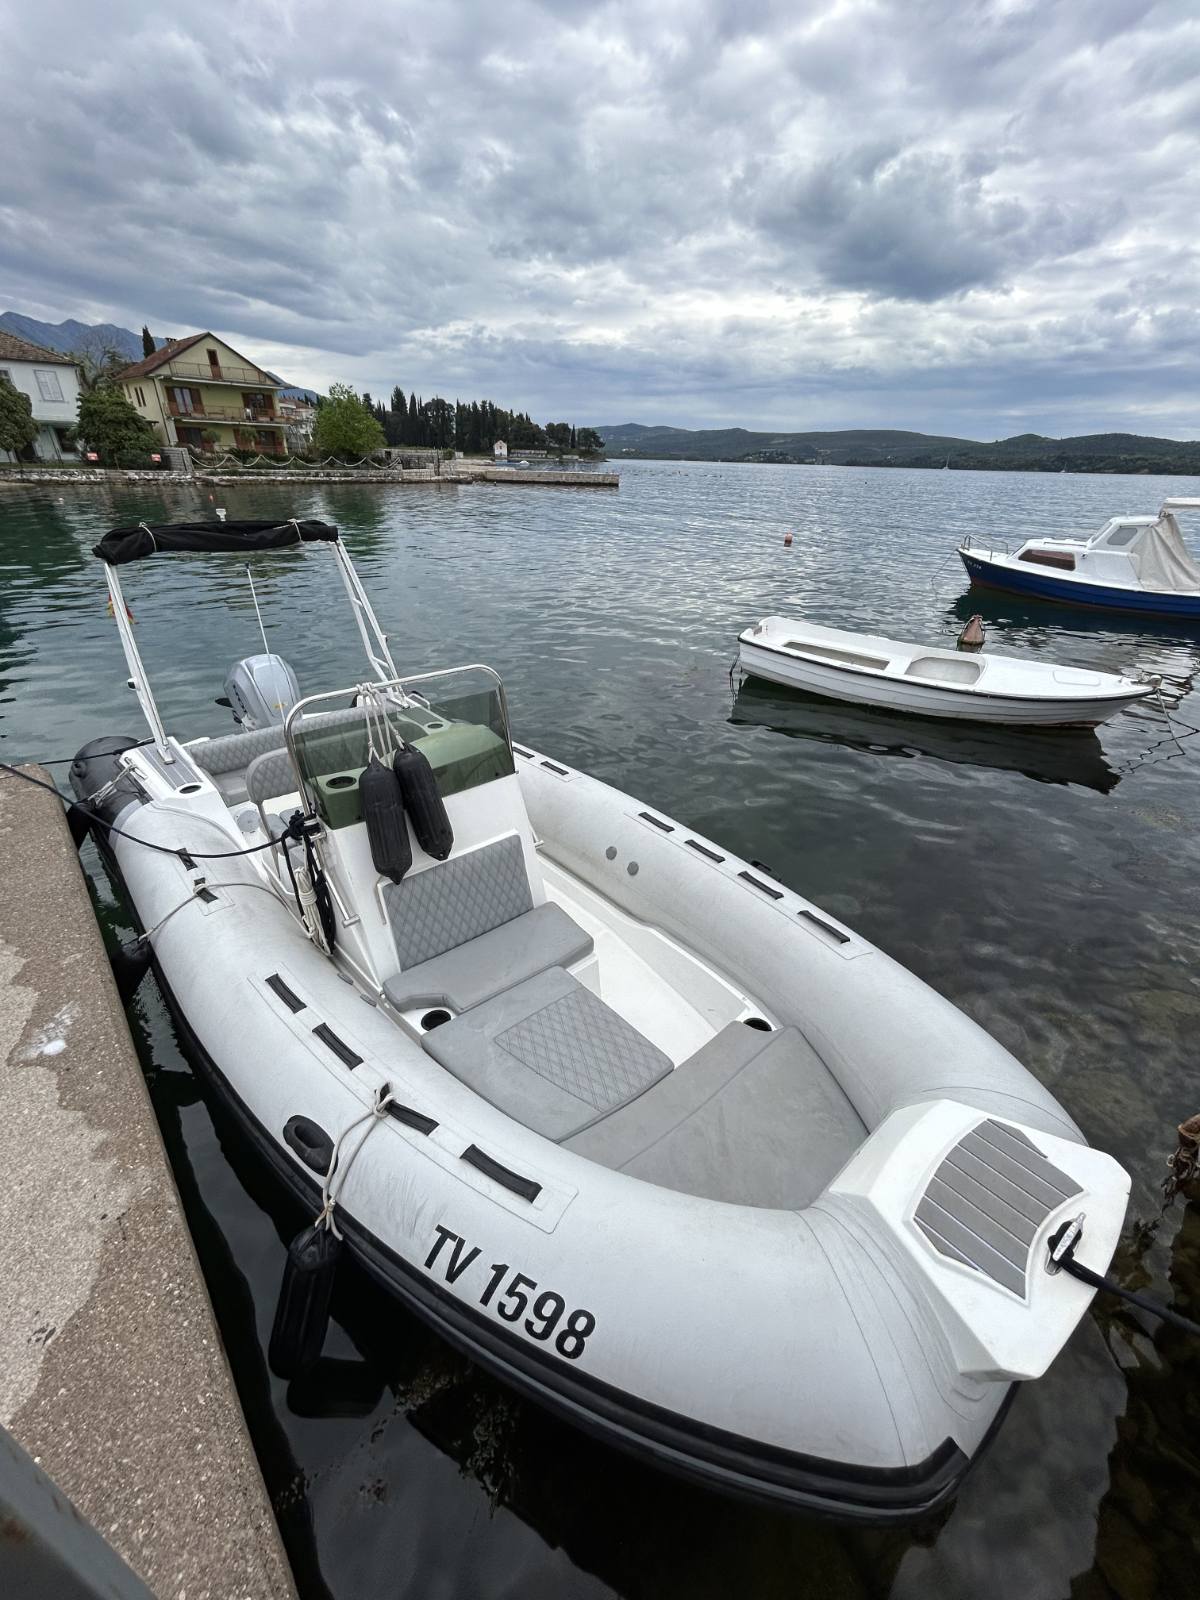 Tiger Topline 600 - Yacht Charter Tivat & Boat hire in Montenegro Bay of Kotor Tivat Porto Montenegro 2